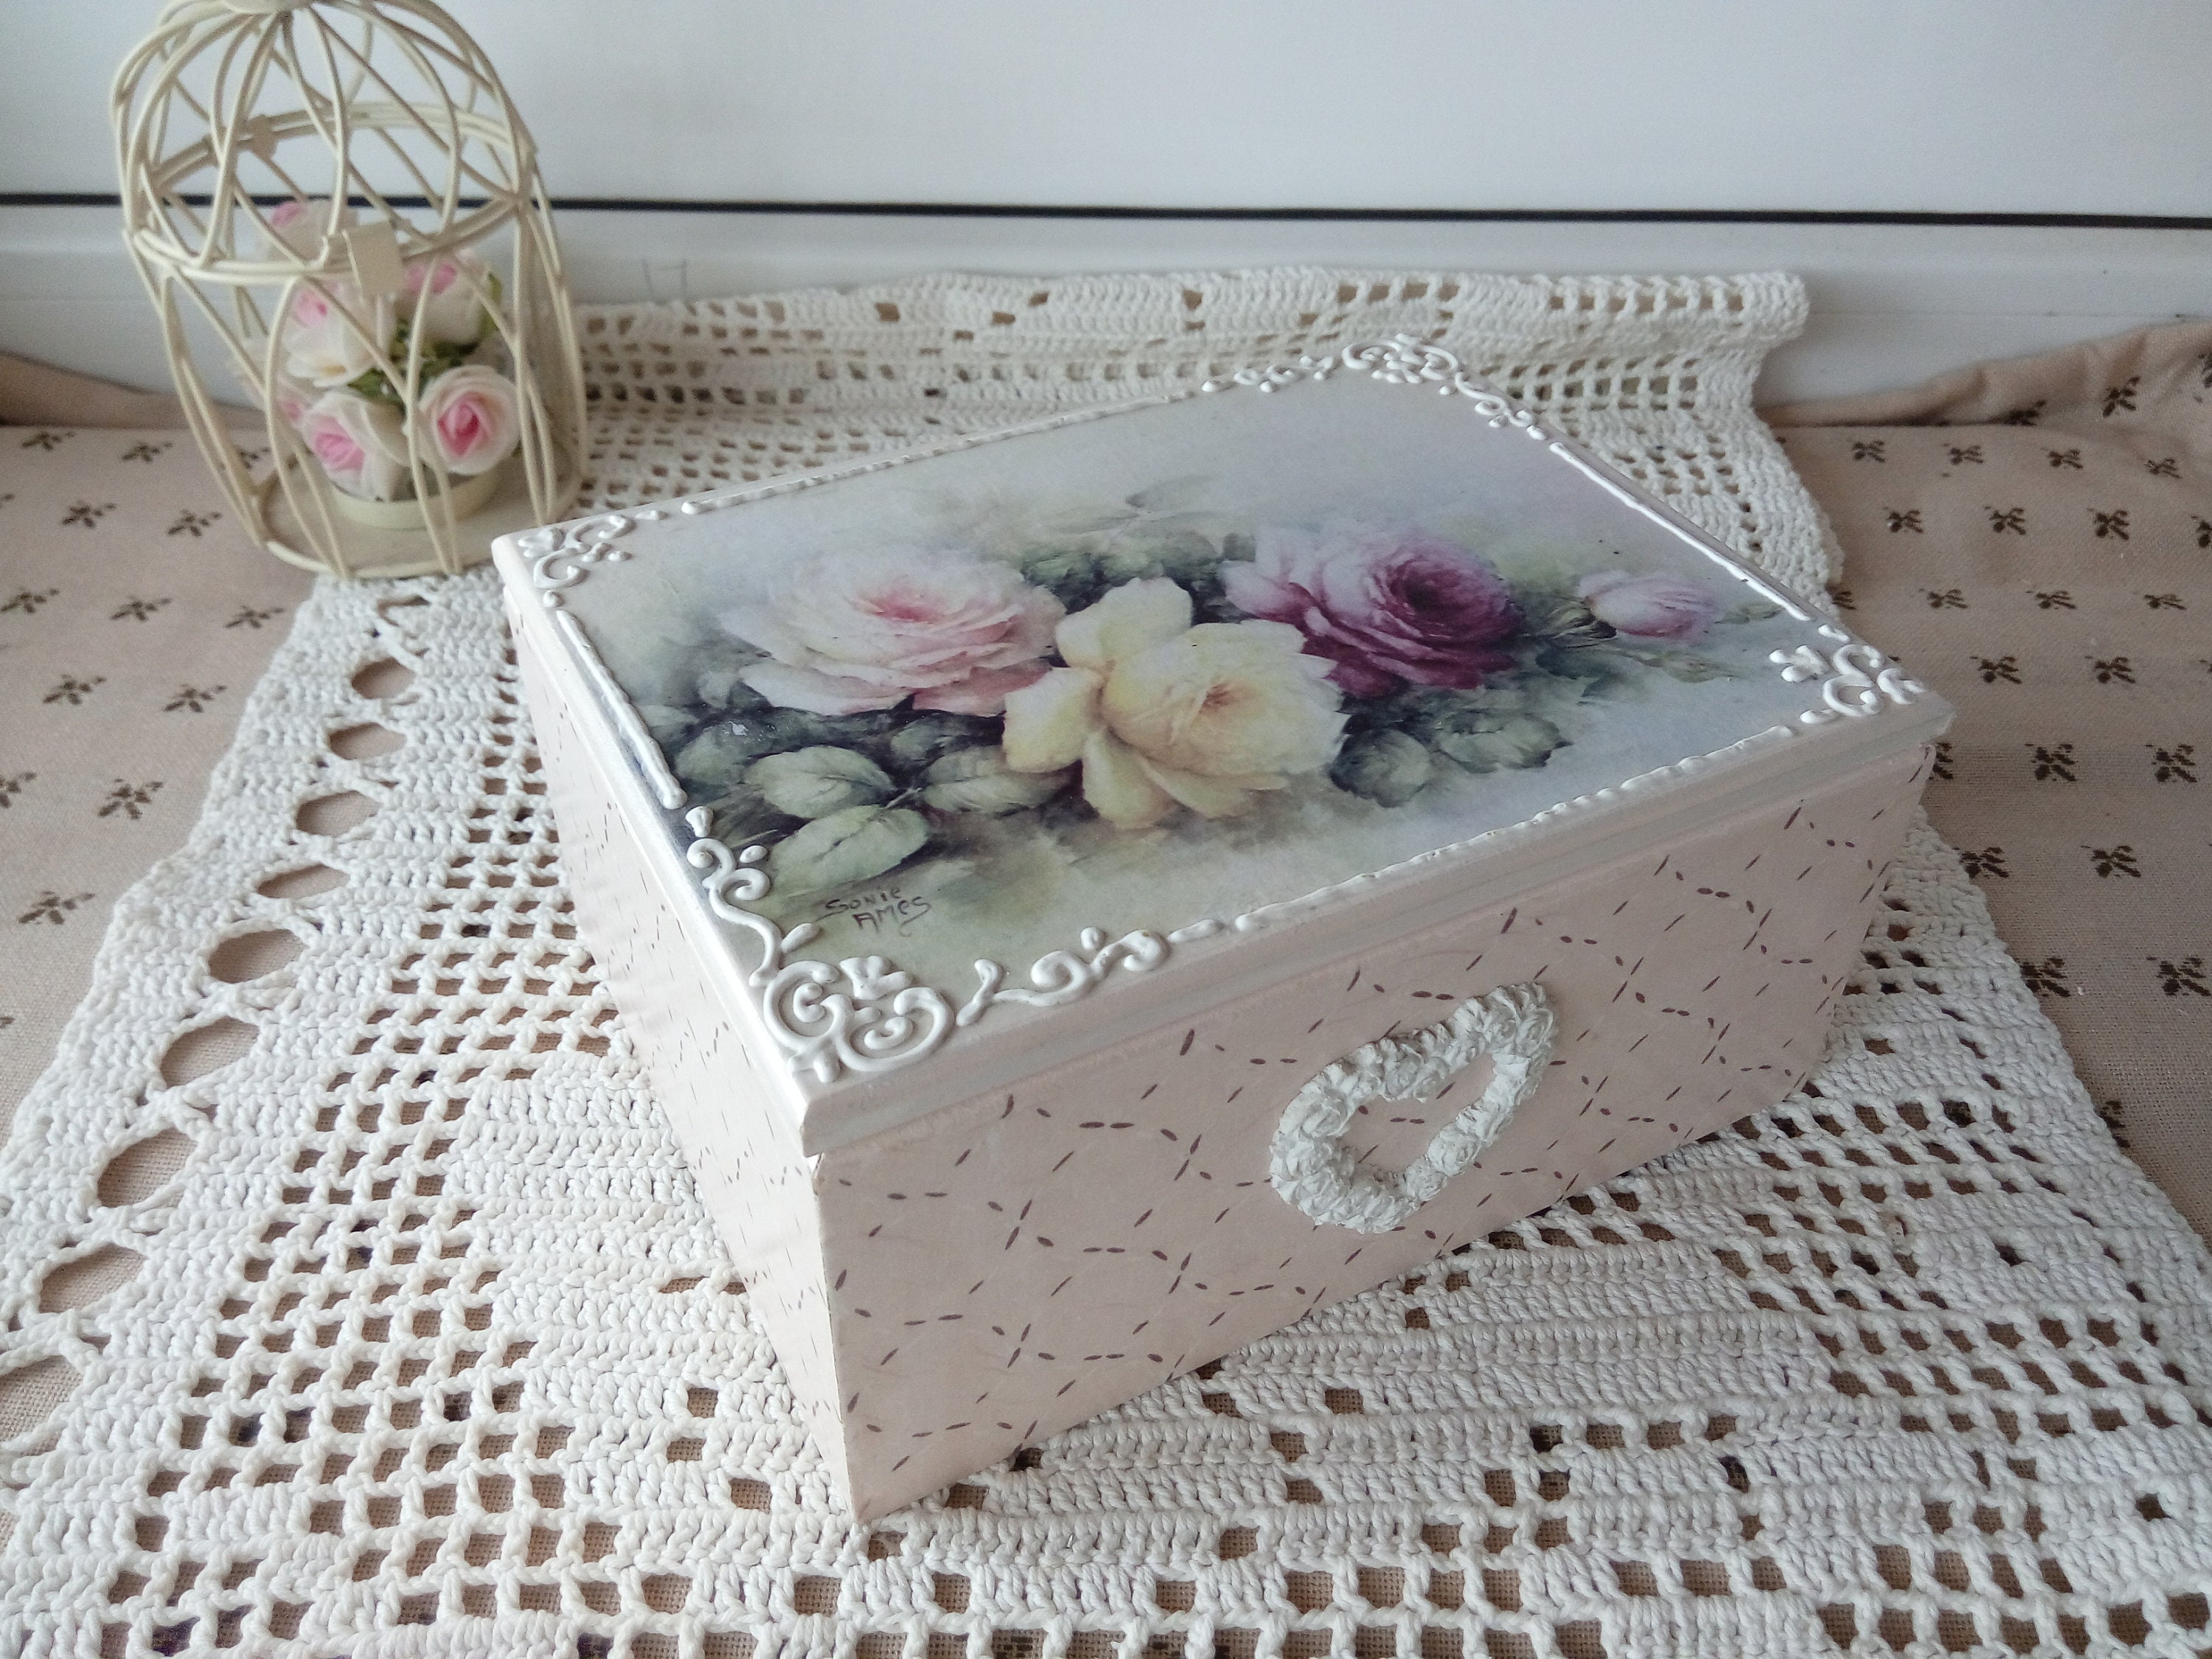 Chanel White Rose Book Design Storage Box - Homsstore